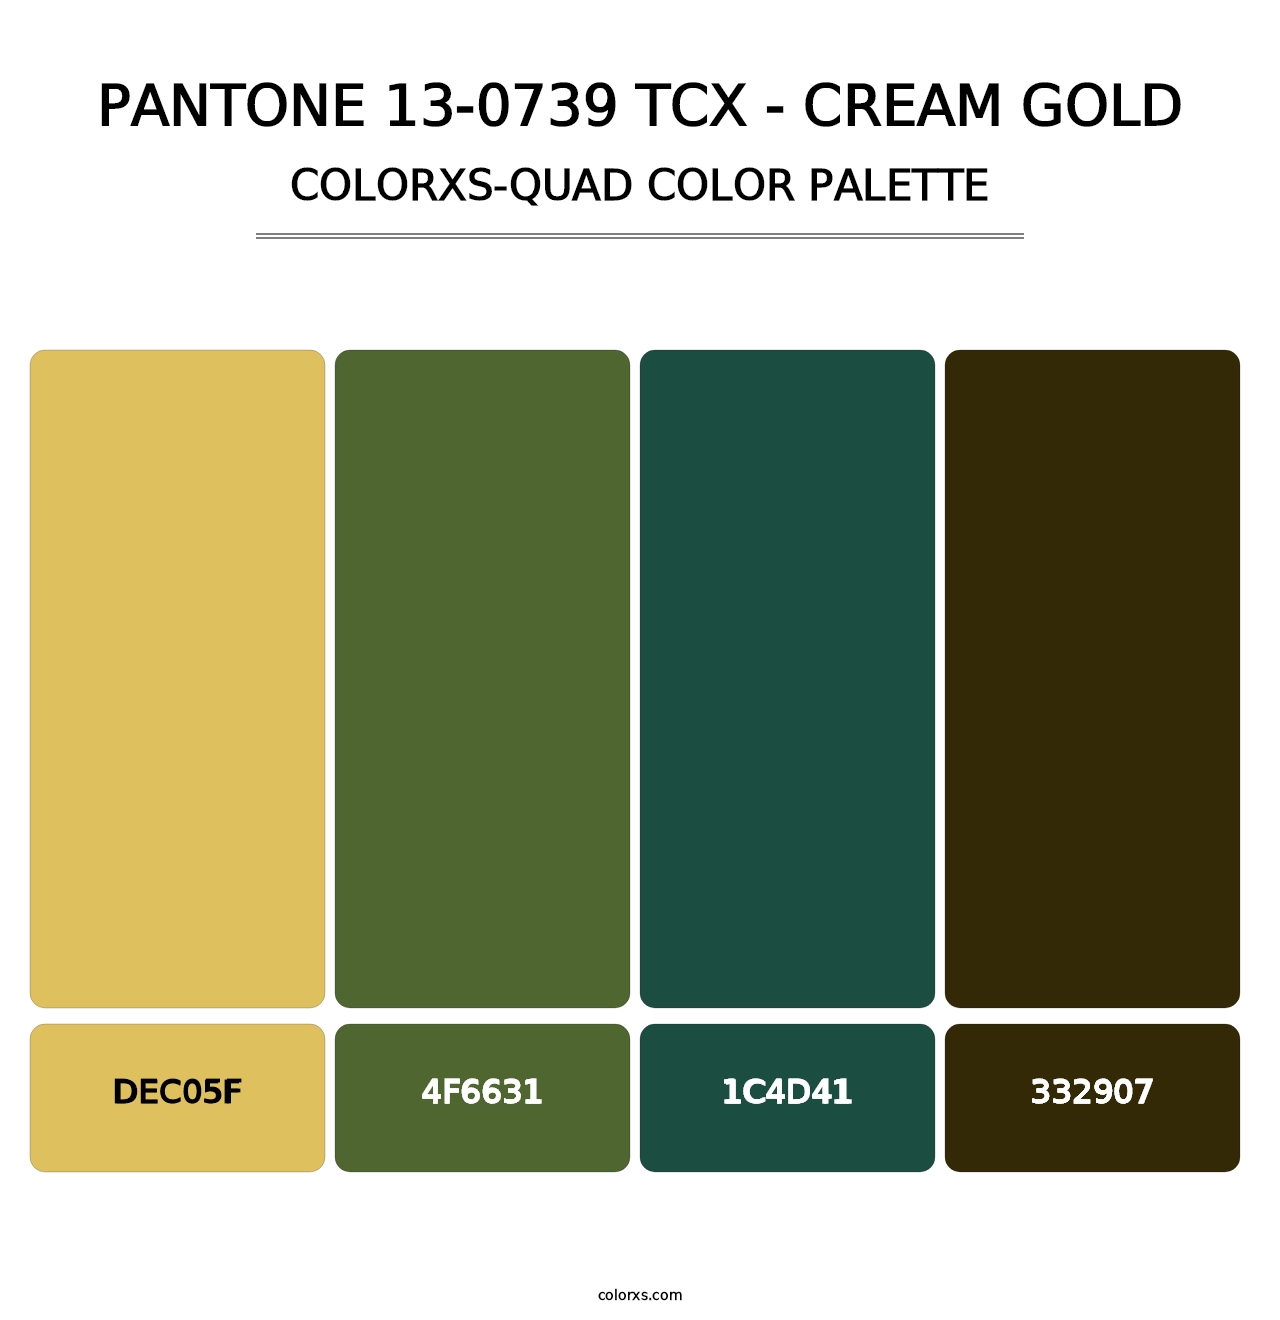 PANTONE 13-0739 TCX - Cream Gold - Colorxs Quad Palette